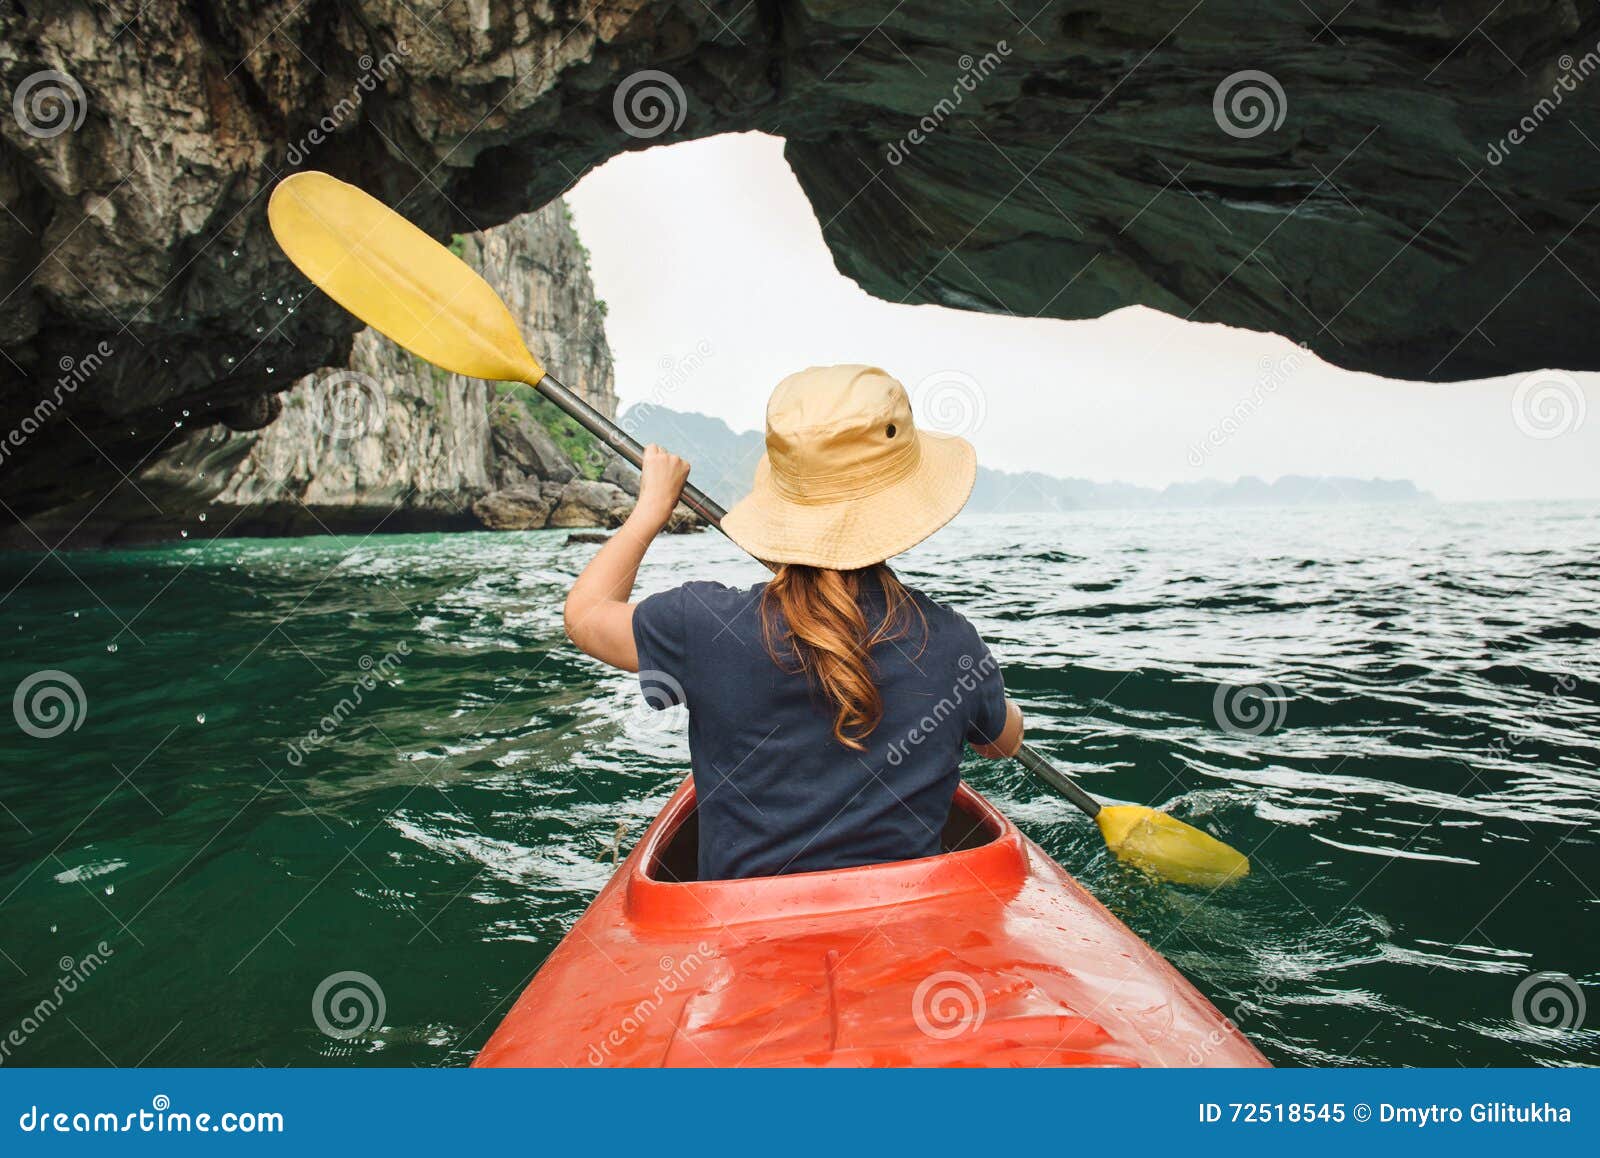 woman explore ha long bay on kayak